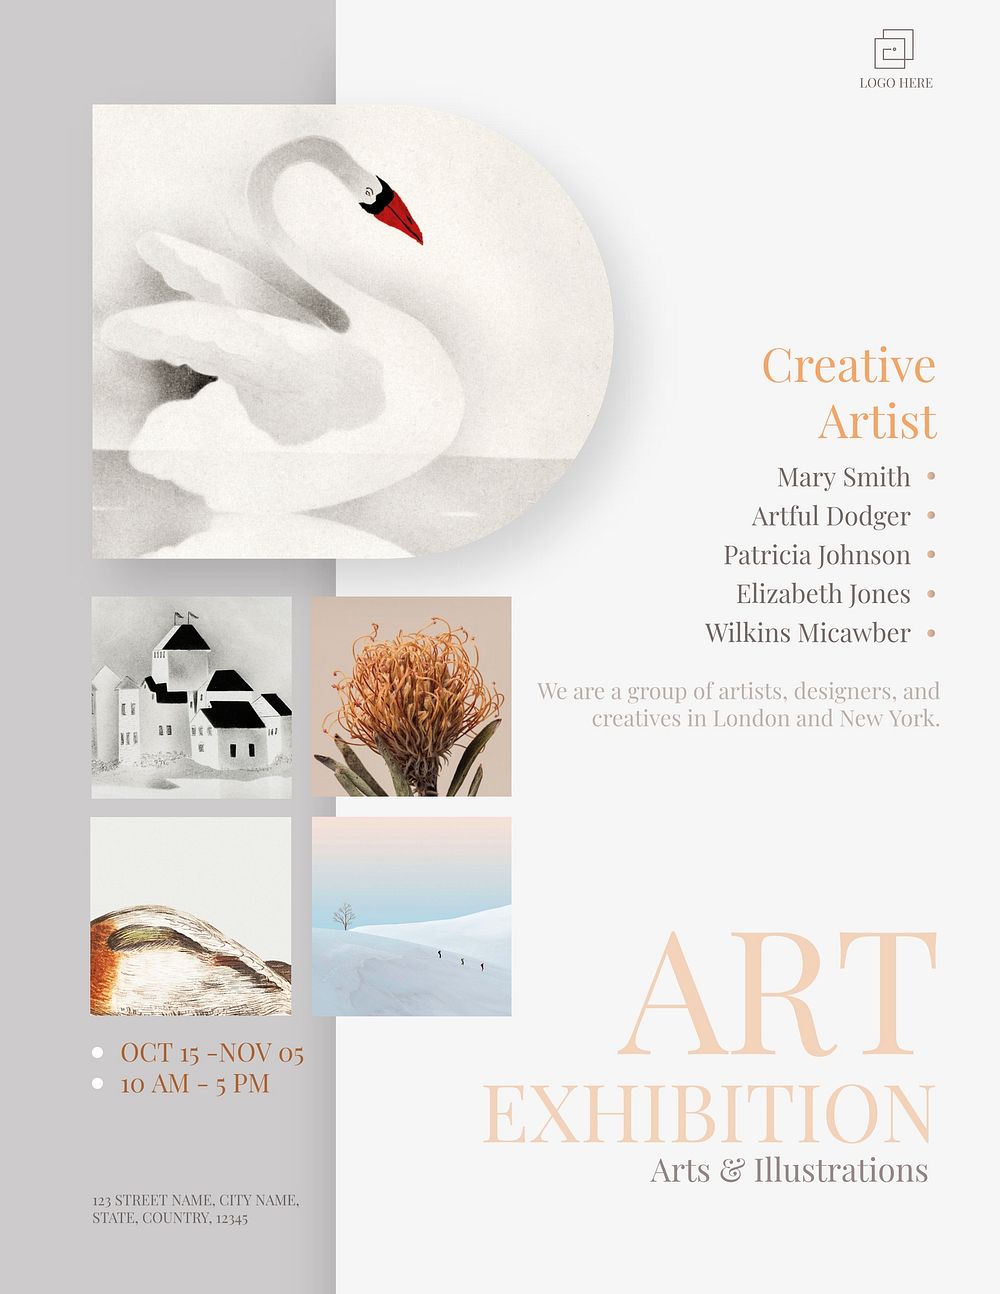 Aesthetic art exhibition flyer template